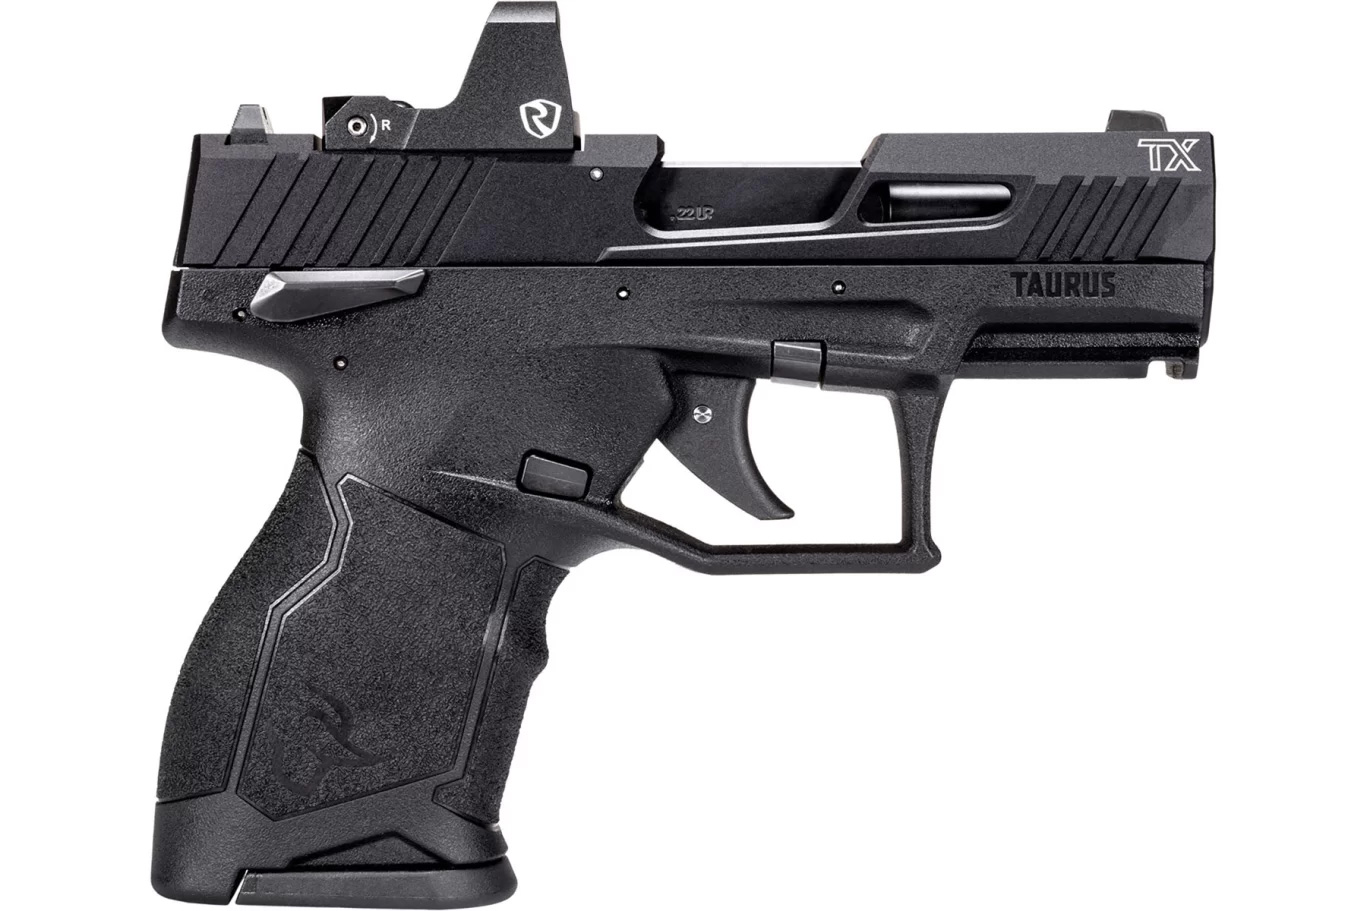 Taurus TX 22 Compact - GAT Daily (Guns Ammo Tactical) | Gun Rights Activist